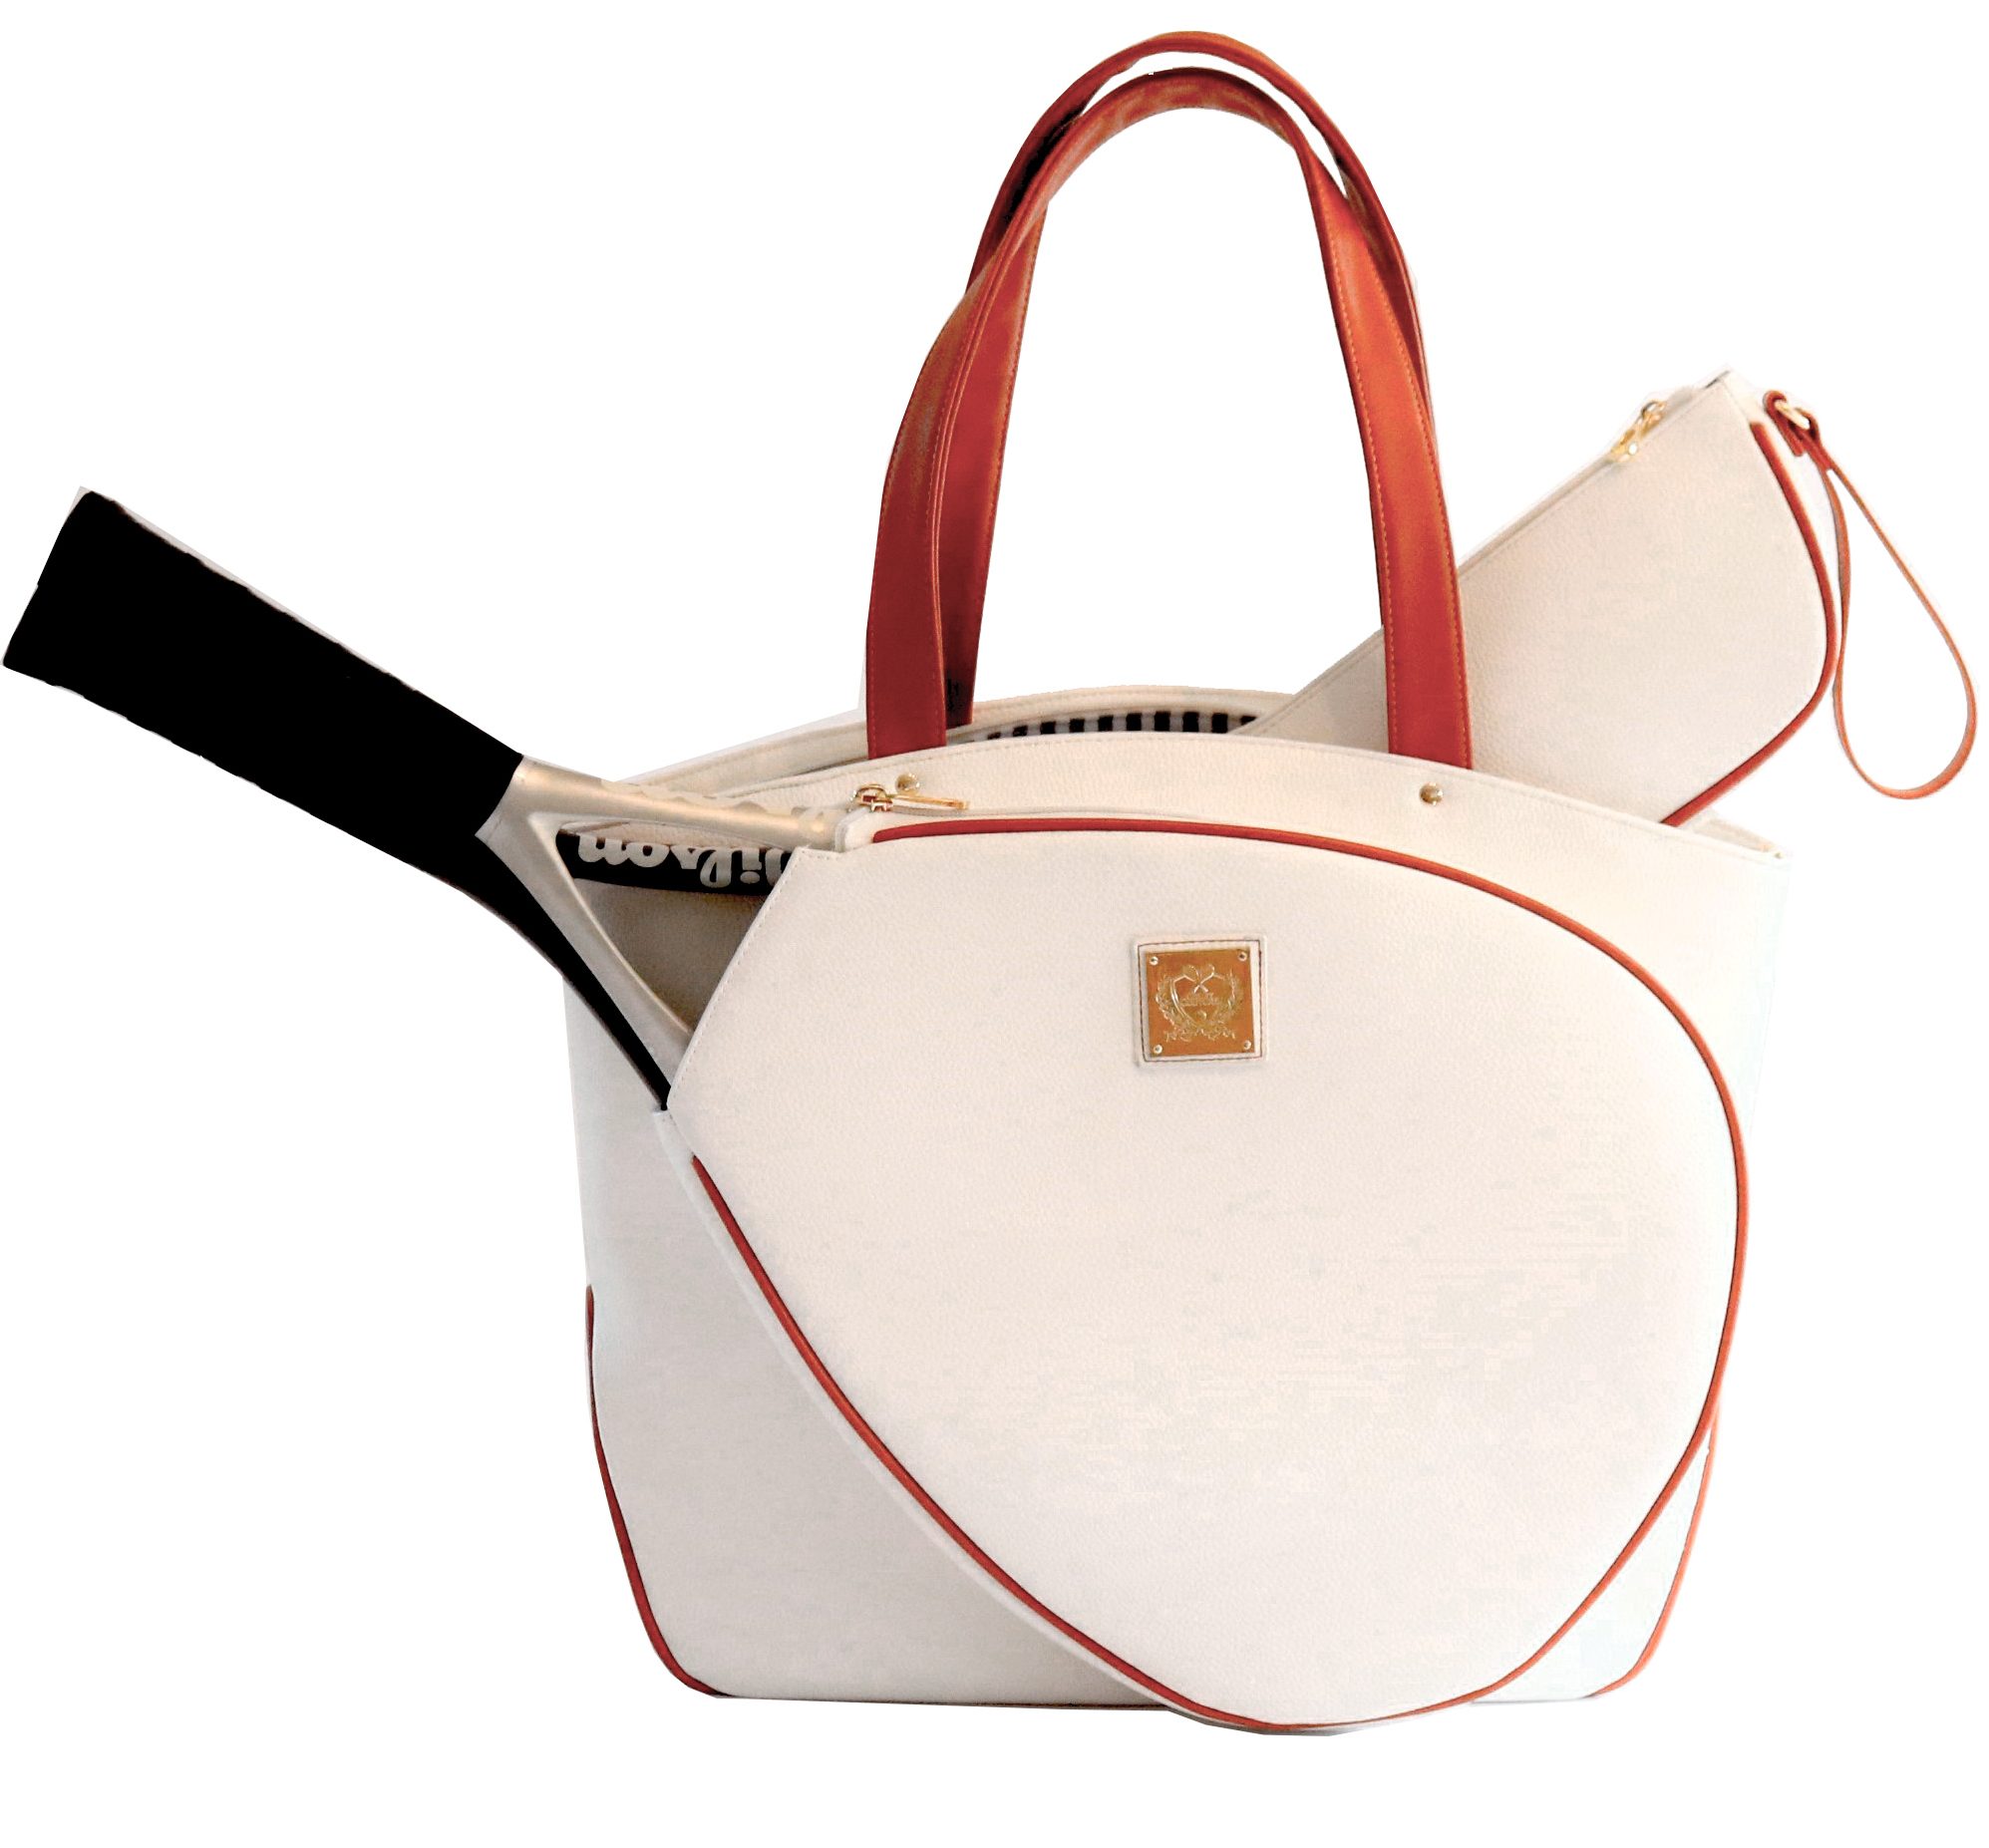 Court Couture Cassanova Tennis Bag (White Pebble) 